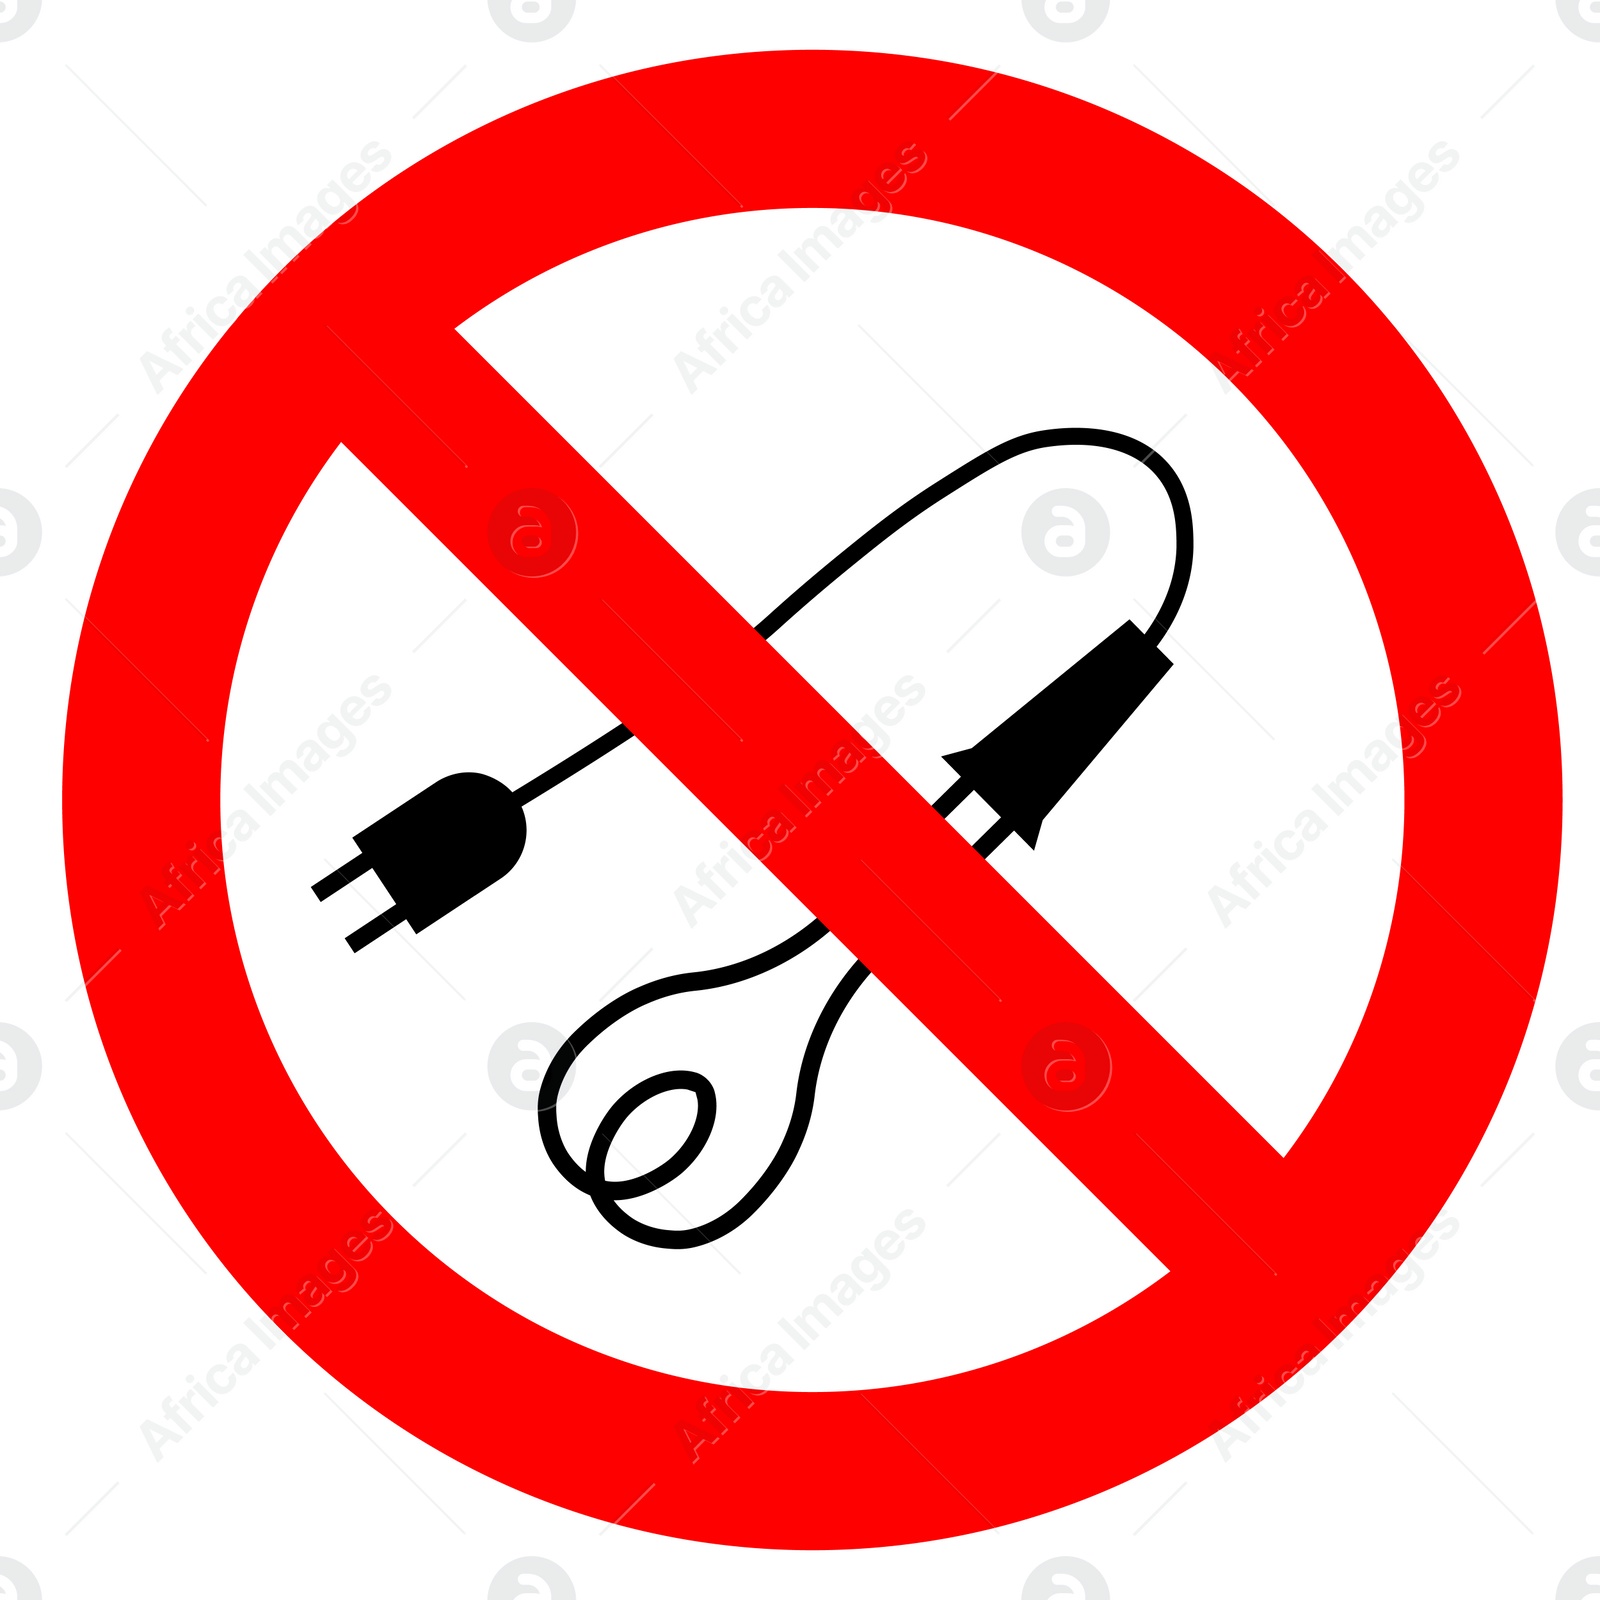 Image of International Maritime Organization (IMO) sign, illustration. Do not use electrical appliances